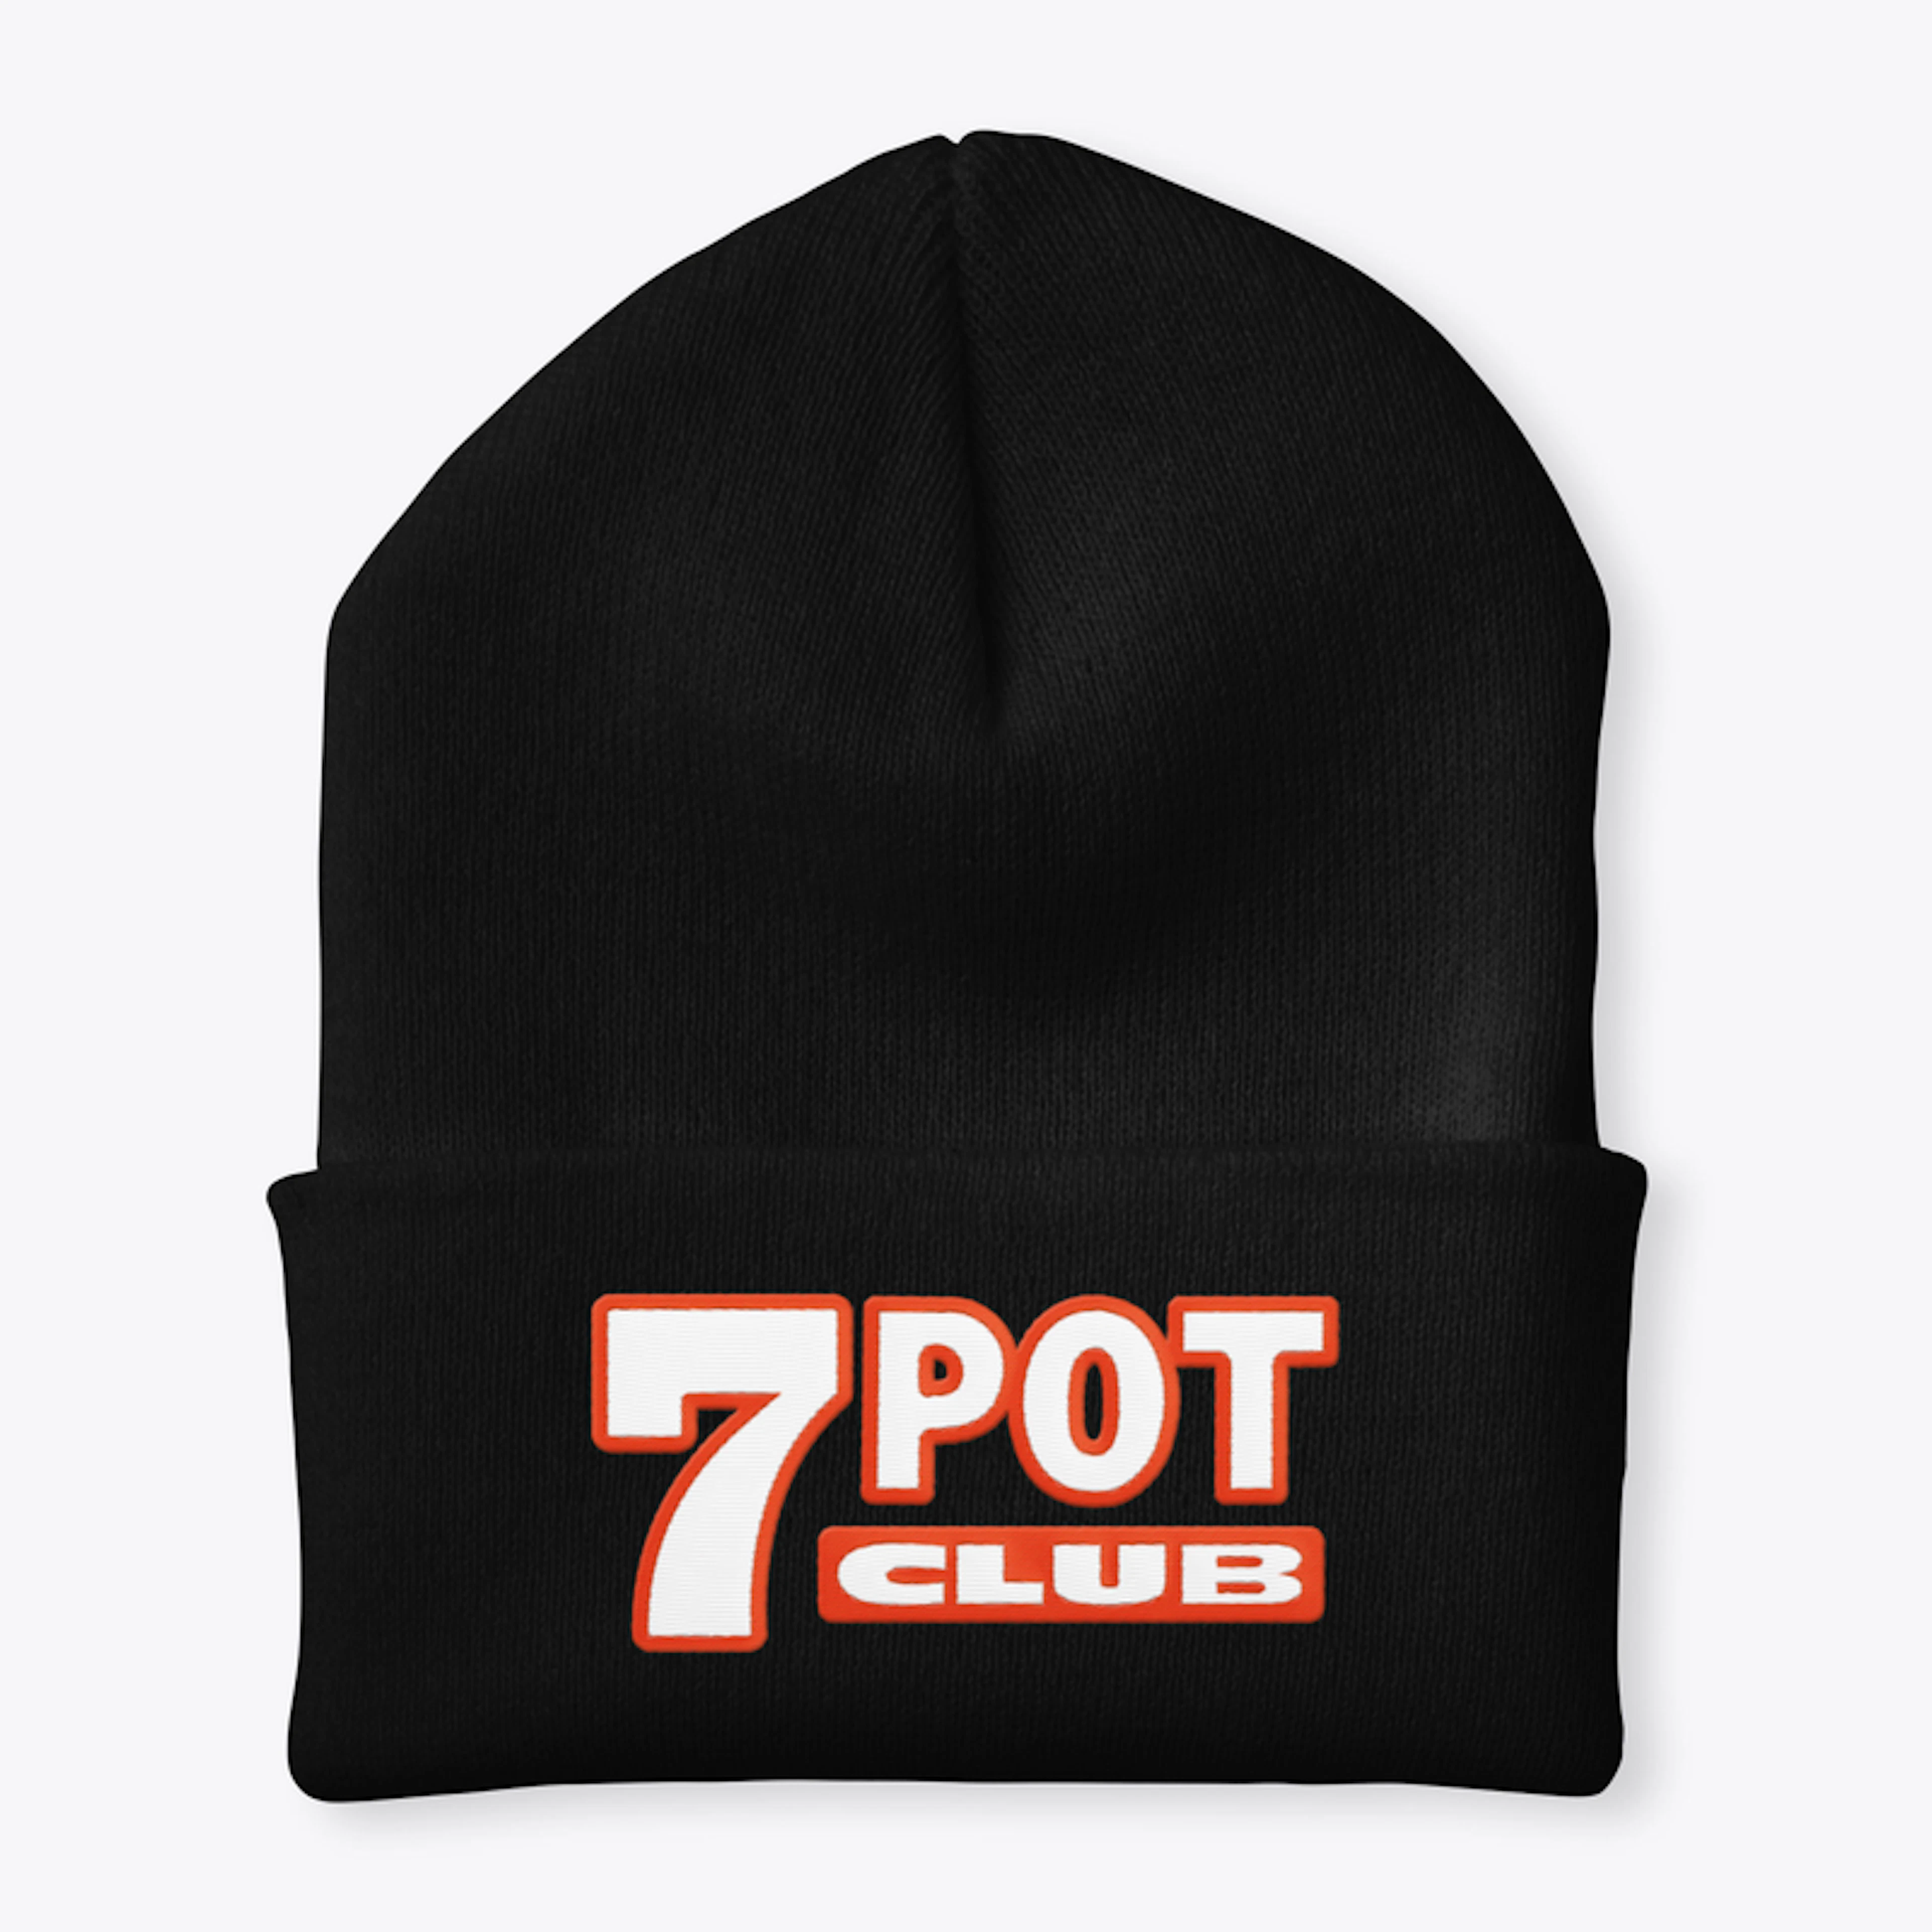 7 Pot Club Headgear (Name only)